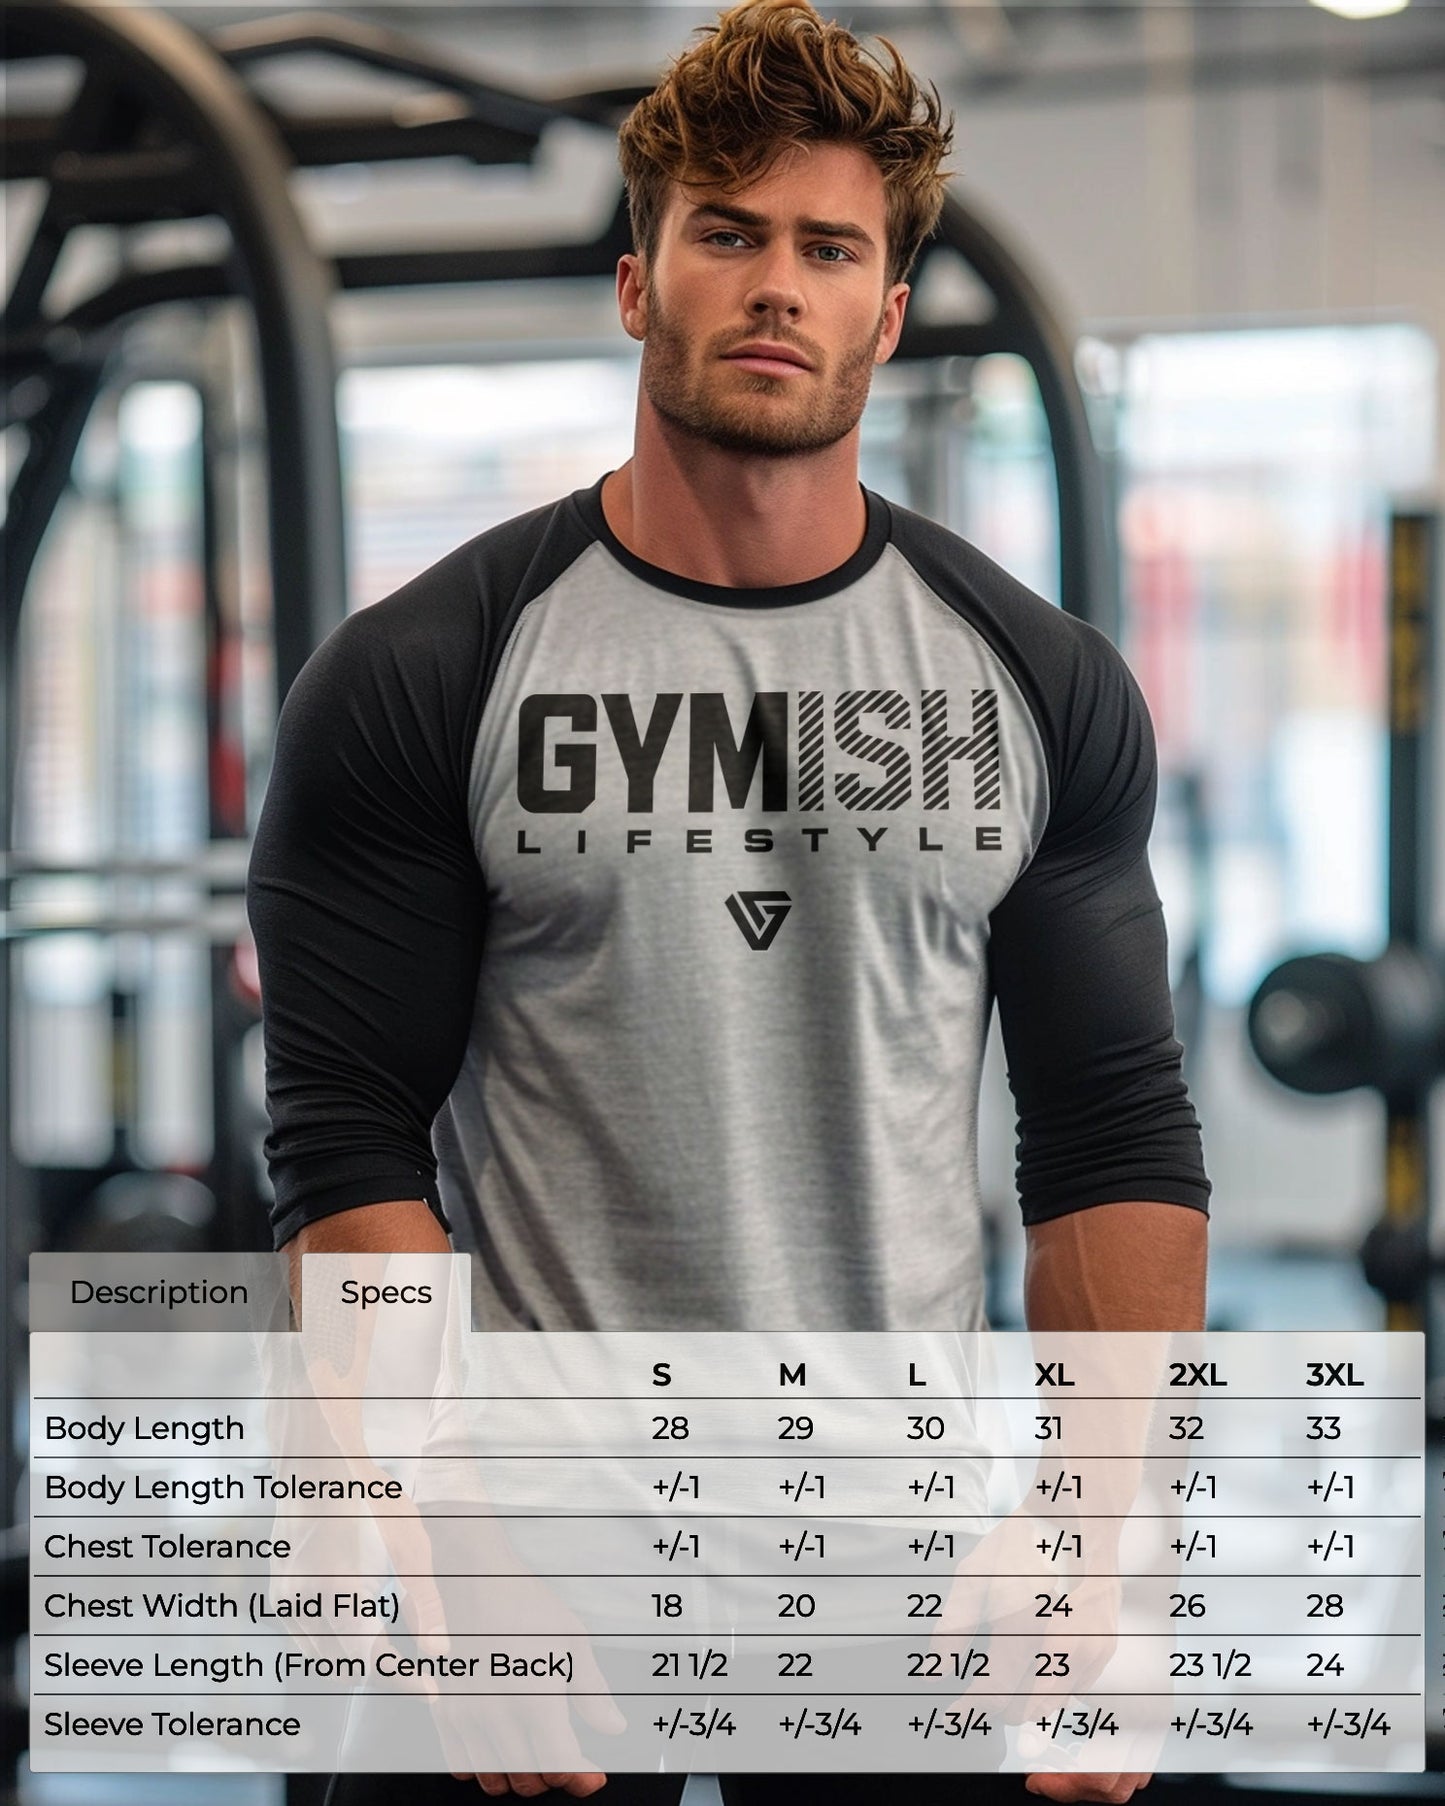 84- RAGLAN Gray Beard, Great Bod Workout Gym T-Shirt for Men